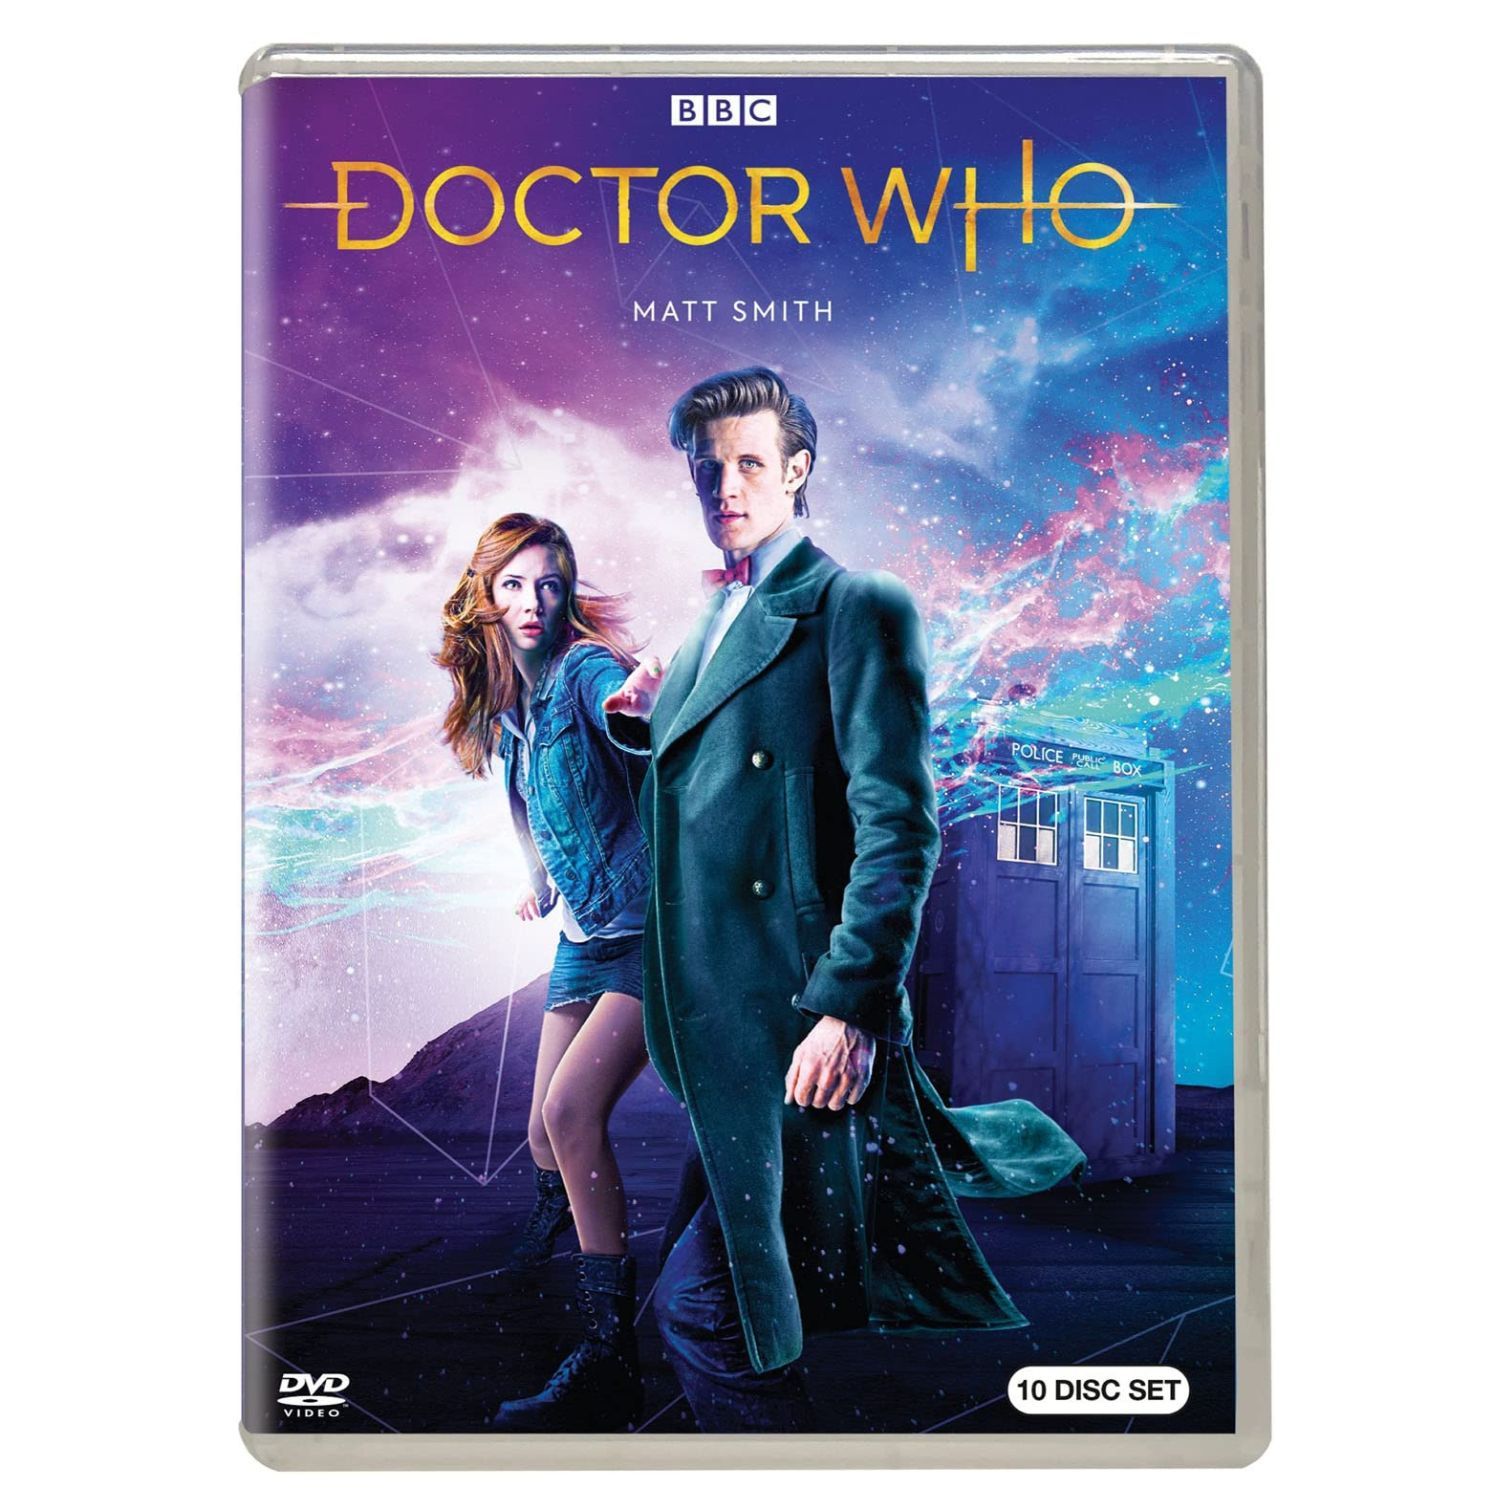 Doctor Who: Matt Smith DVD Collection cover